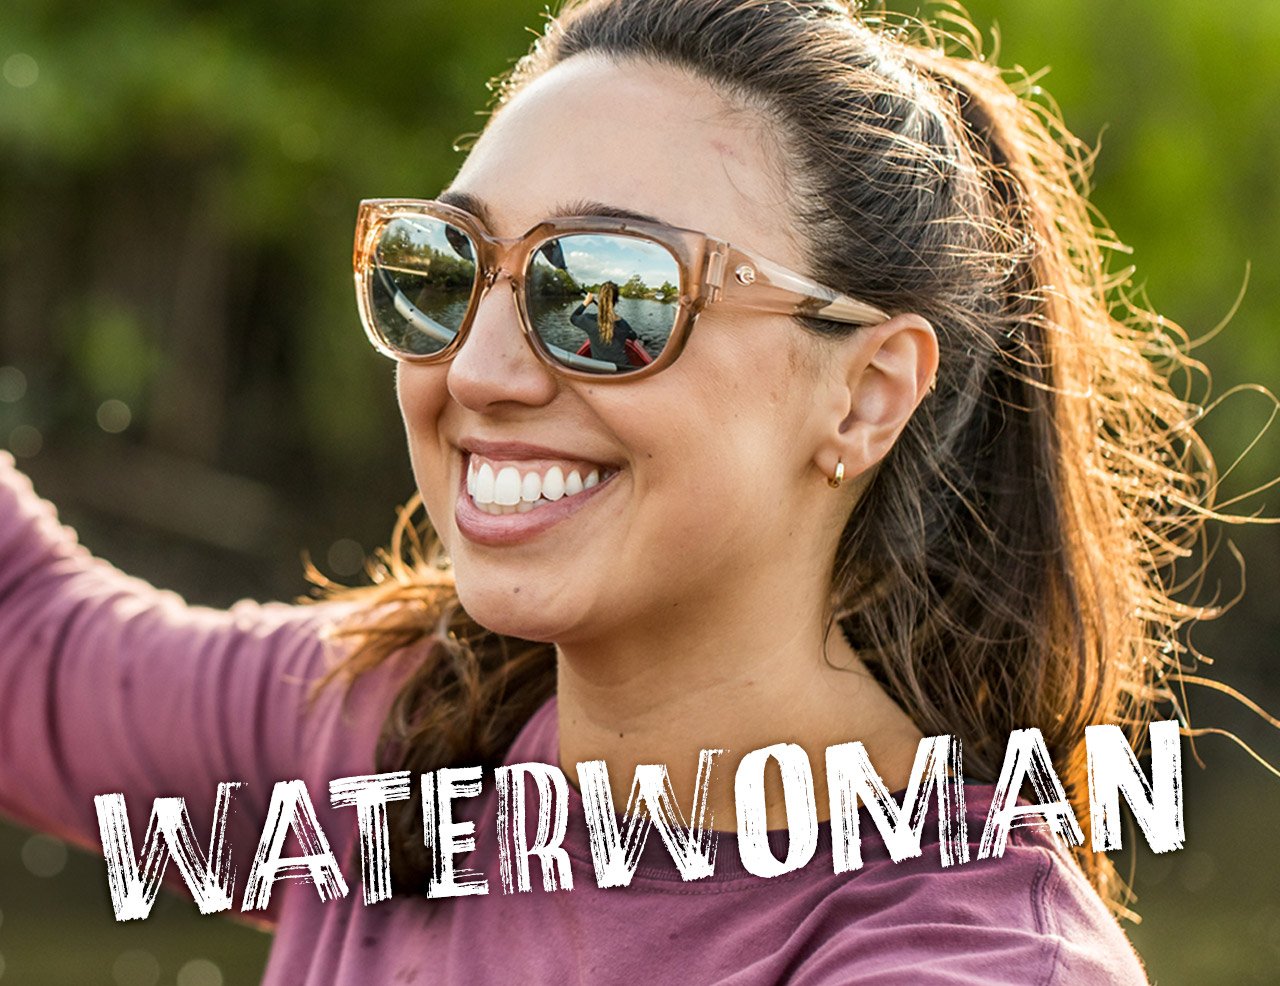 waterwoman costa sunglasses